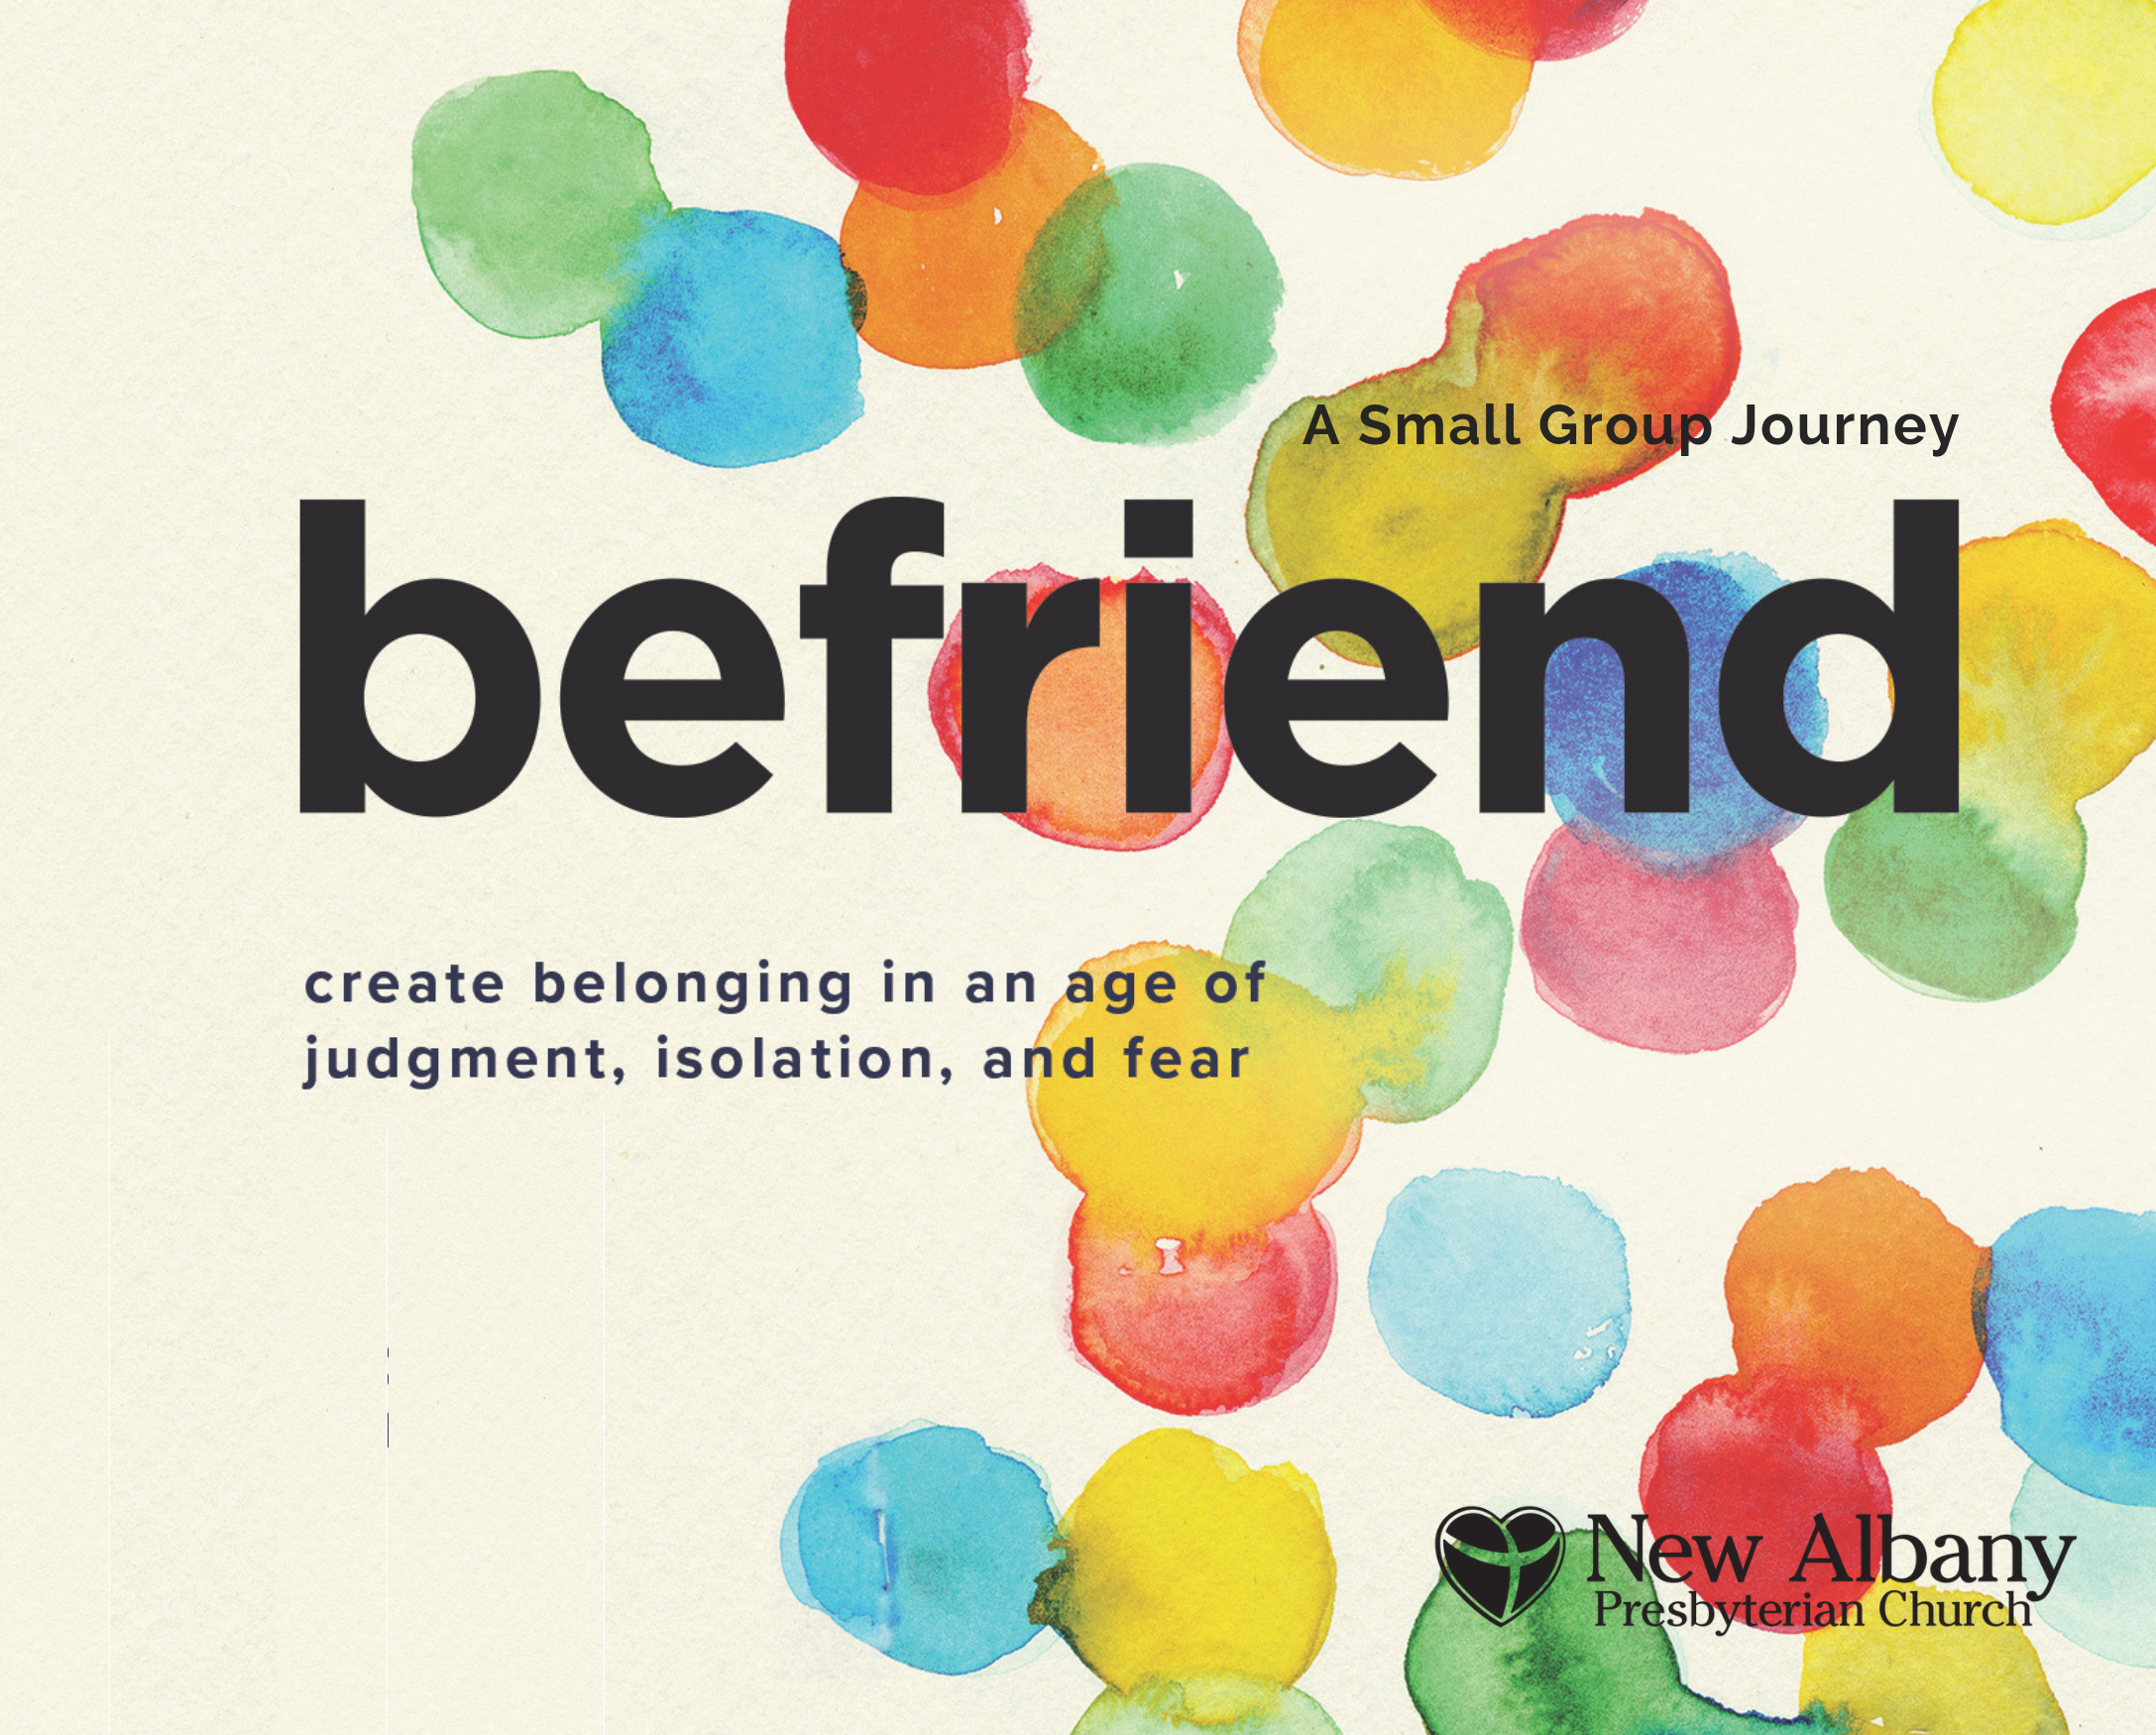 Befriend #5: What should the church look like?